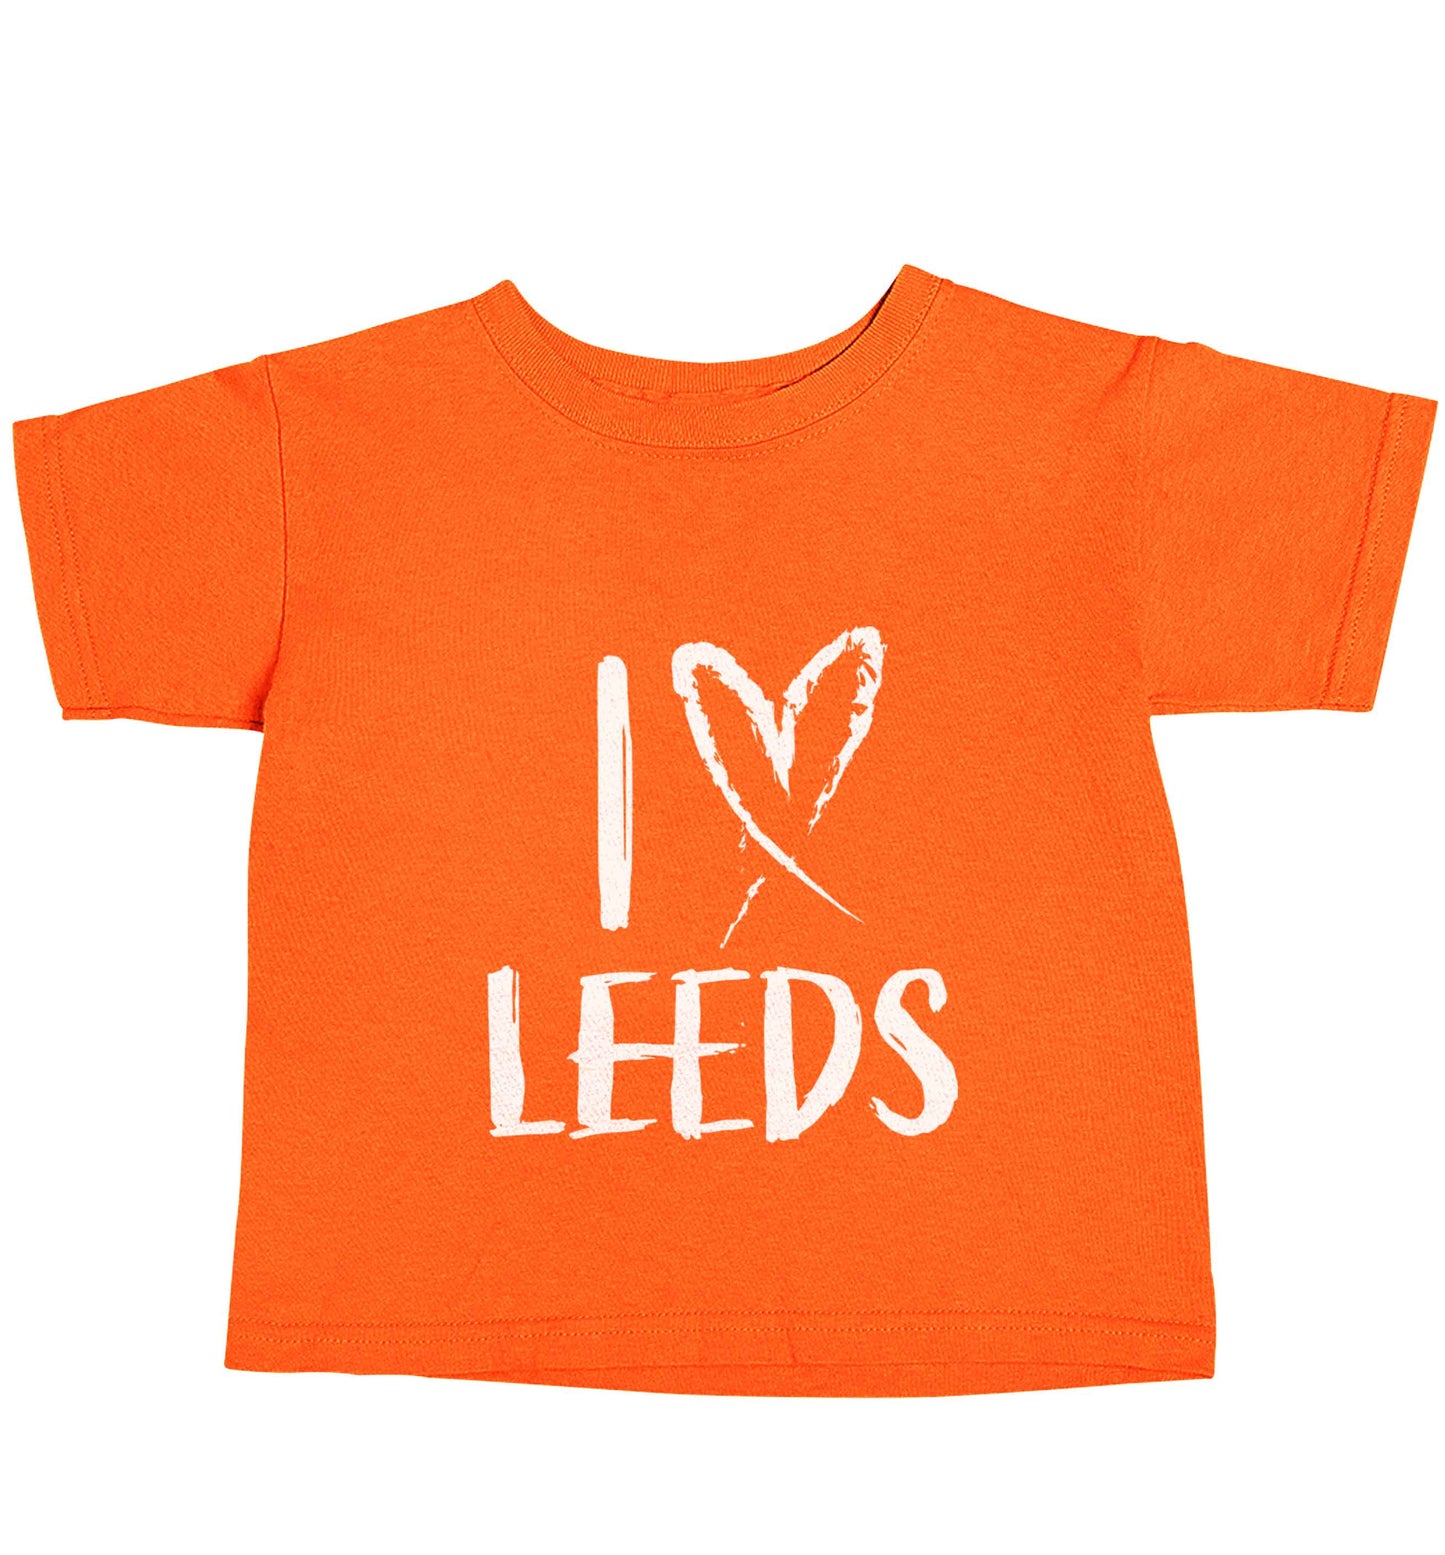 I love Leeds orange baby toddler Tshirt 2 Years